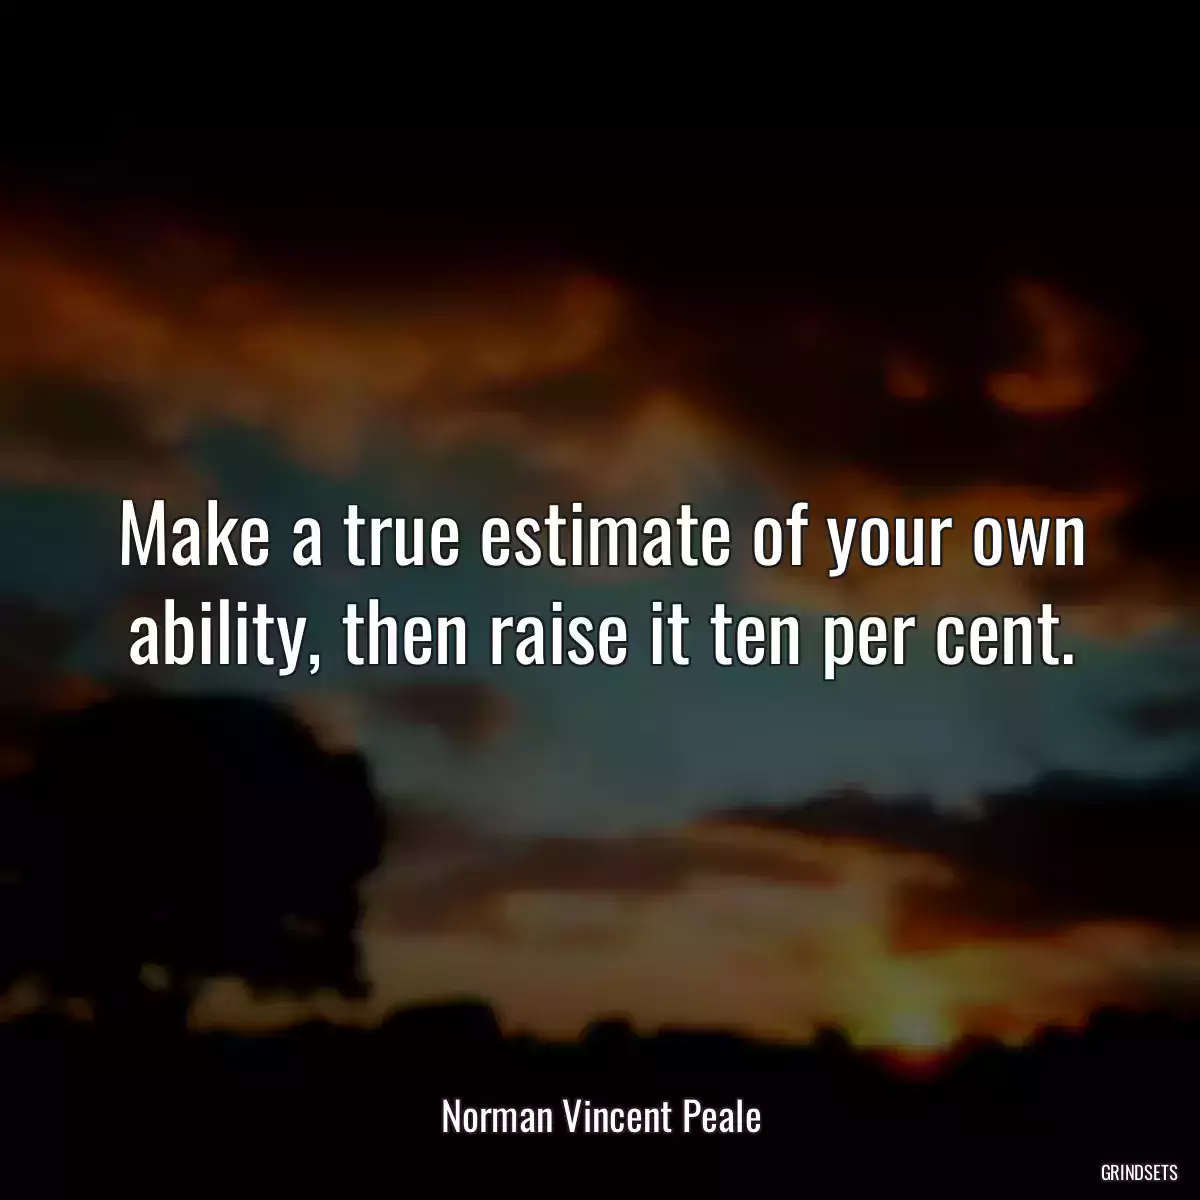 Make a true estimate of your own ability, then raise it ten per cent.